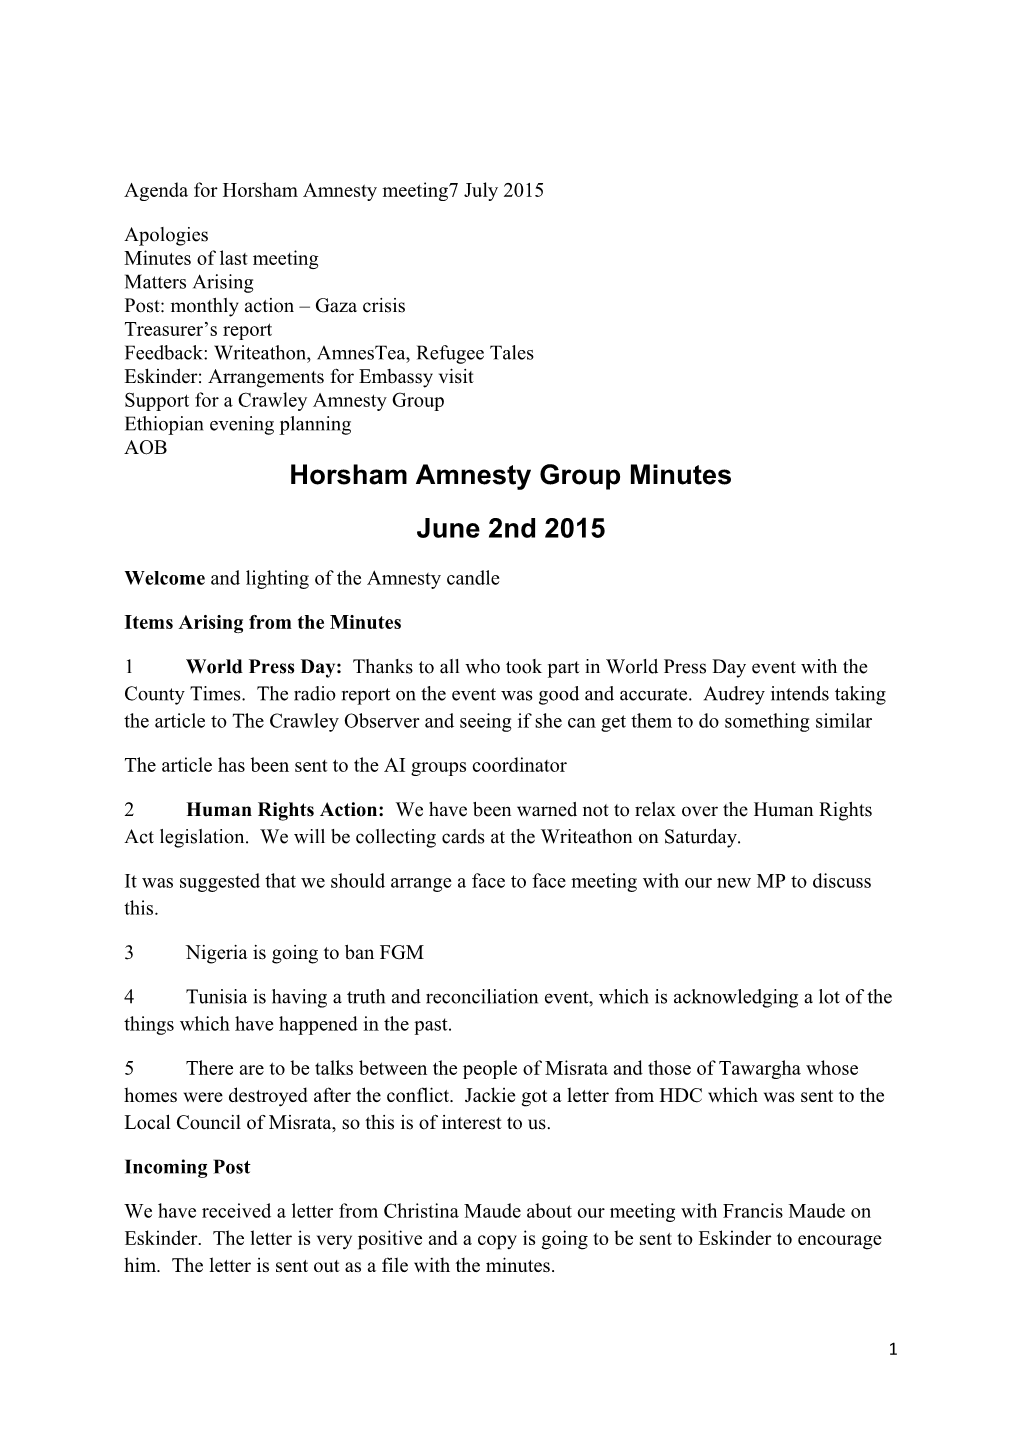 Agenda for Horsham Amnesty Meeting7 July 2015